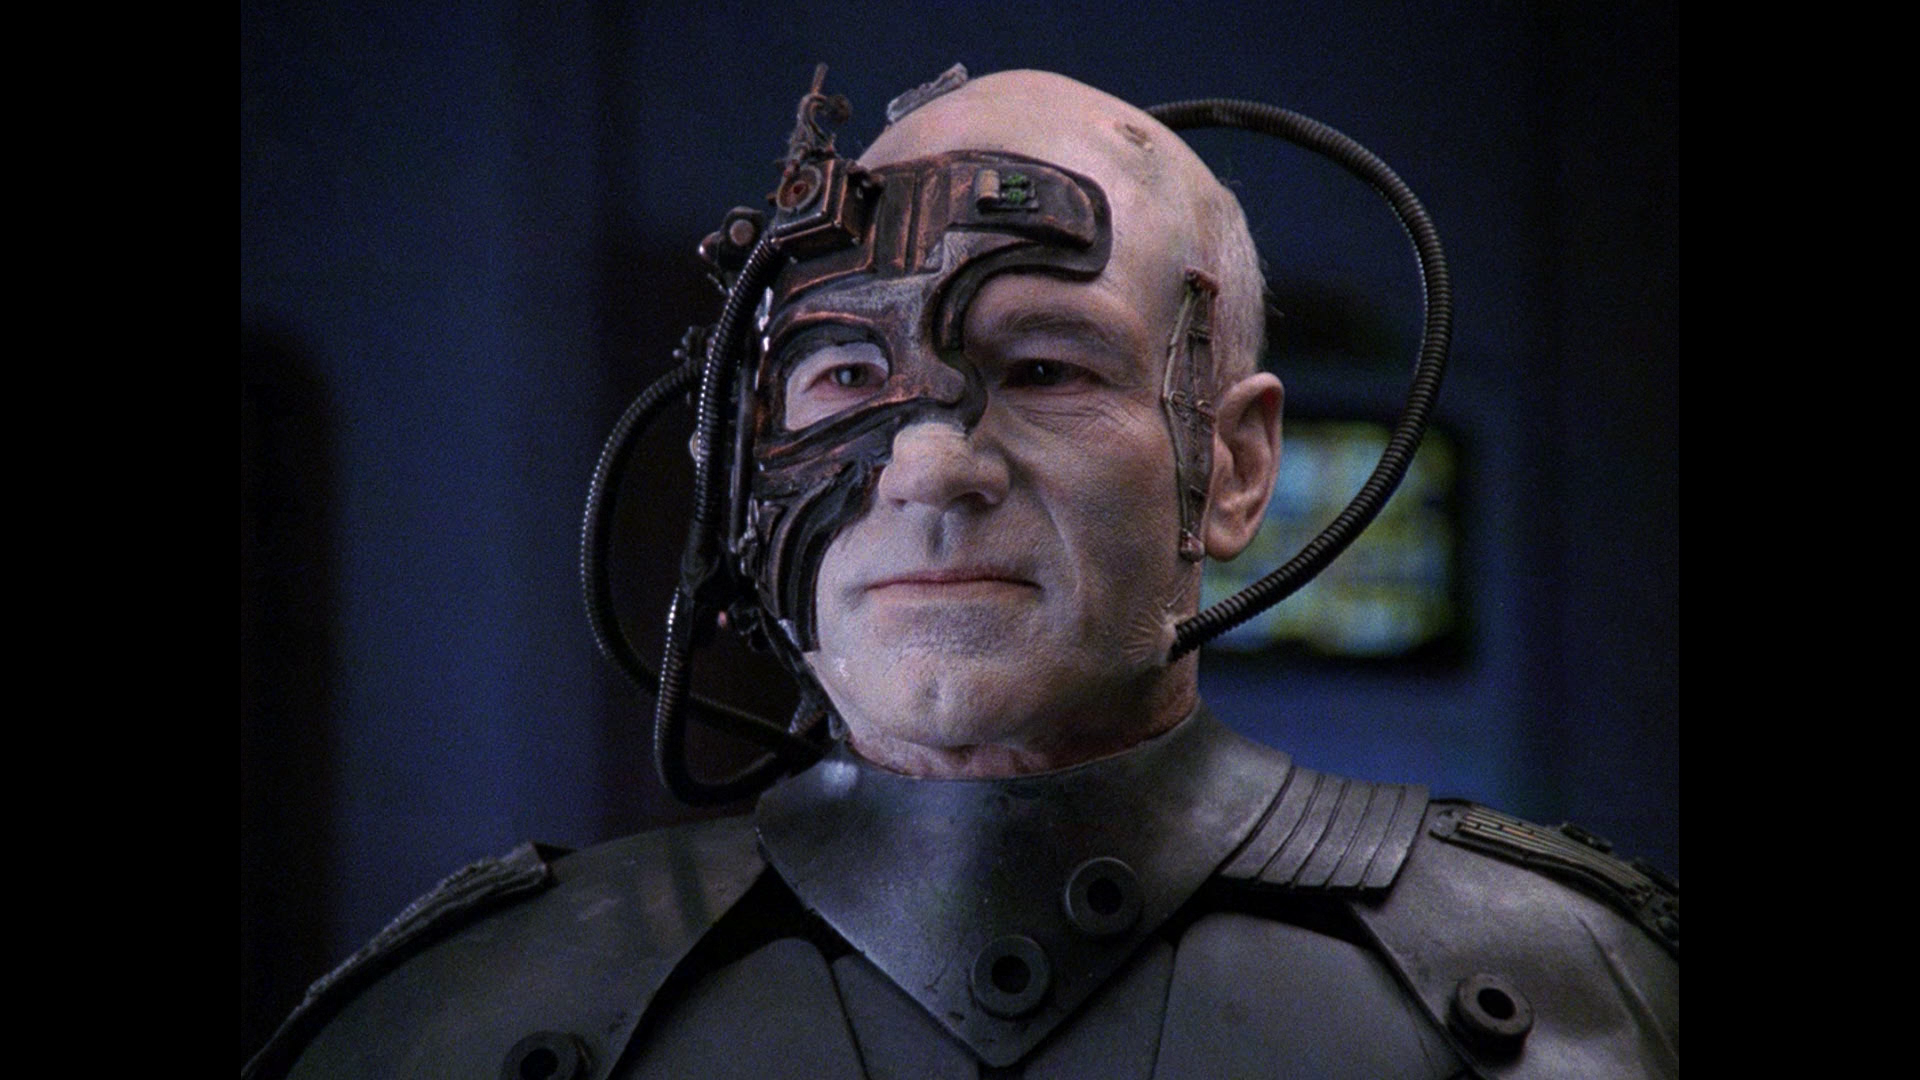 Patrick Steward as Locutus of Borg in Star Trek the Next Generation